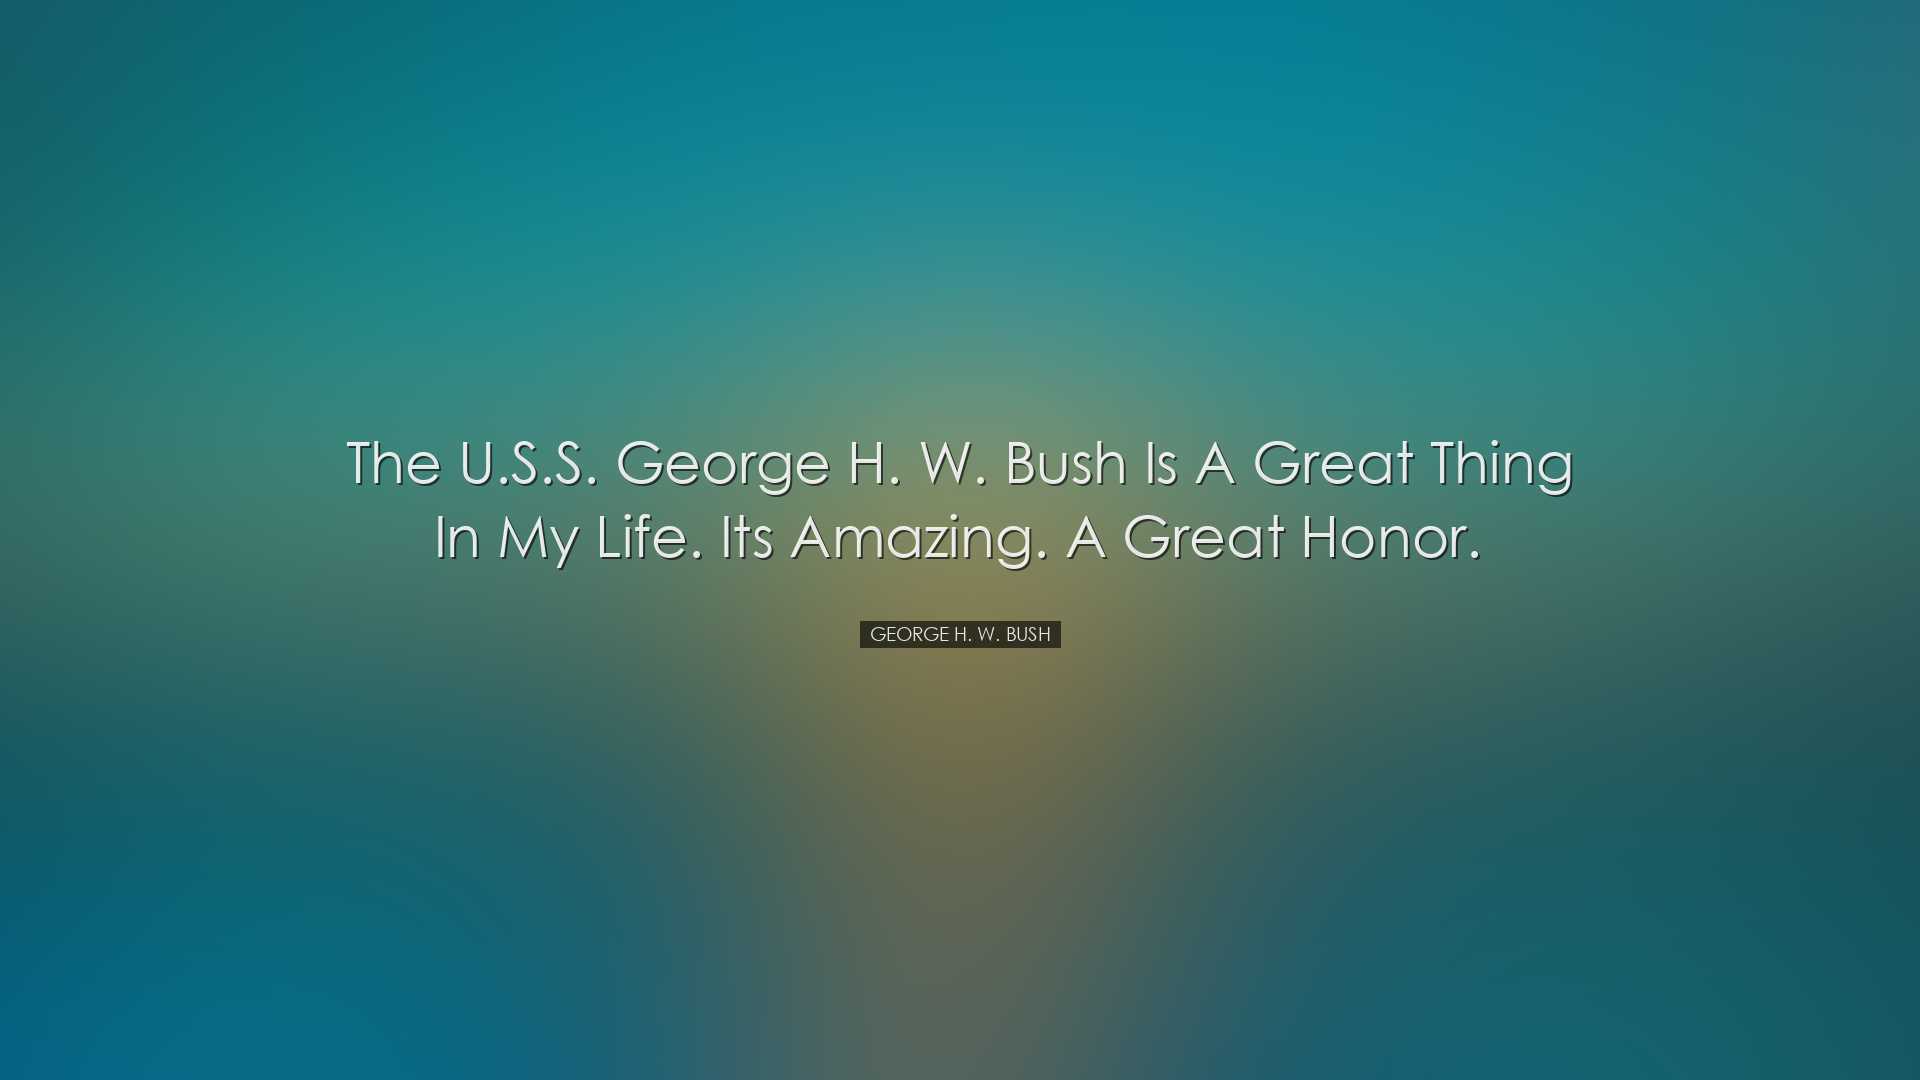 The U.S.S. George H. W. Bush is a great thing in my life. Its amaz